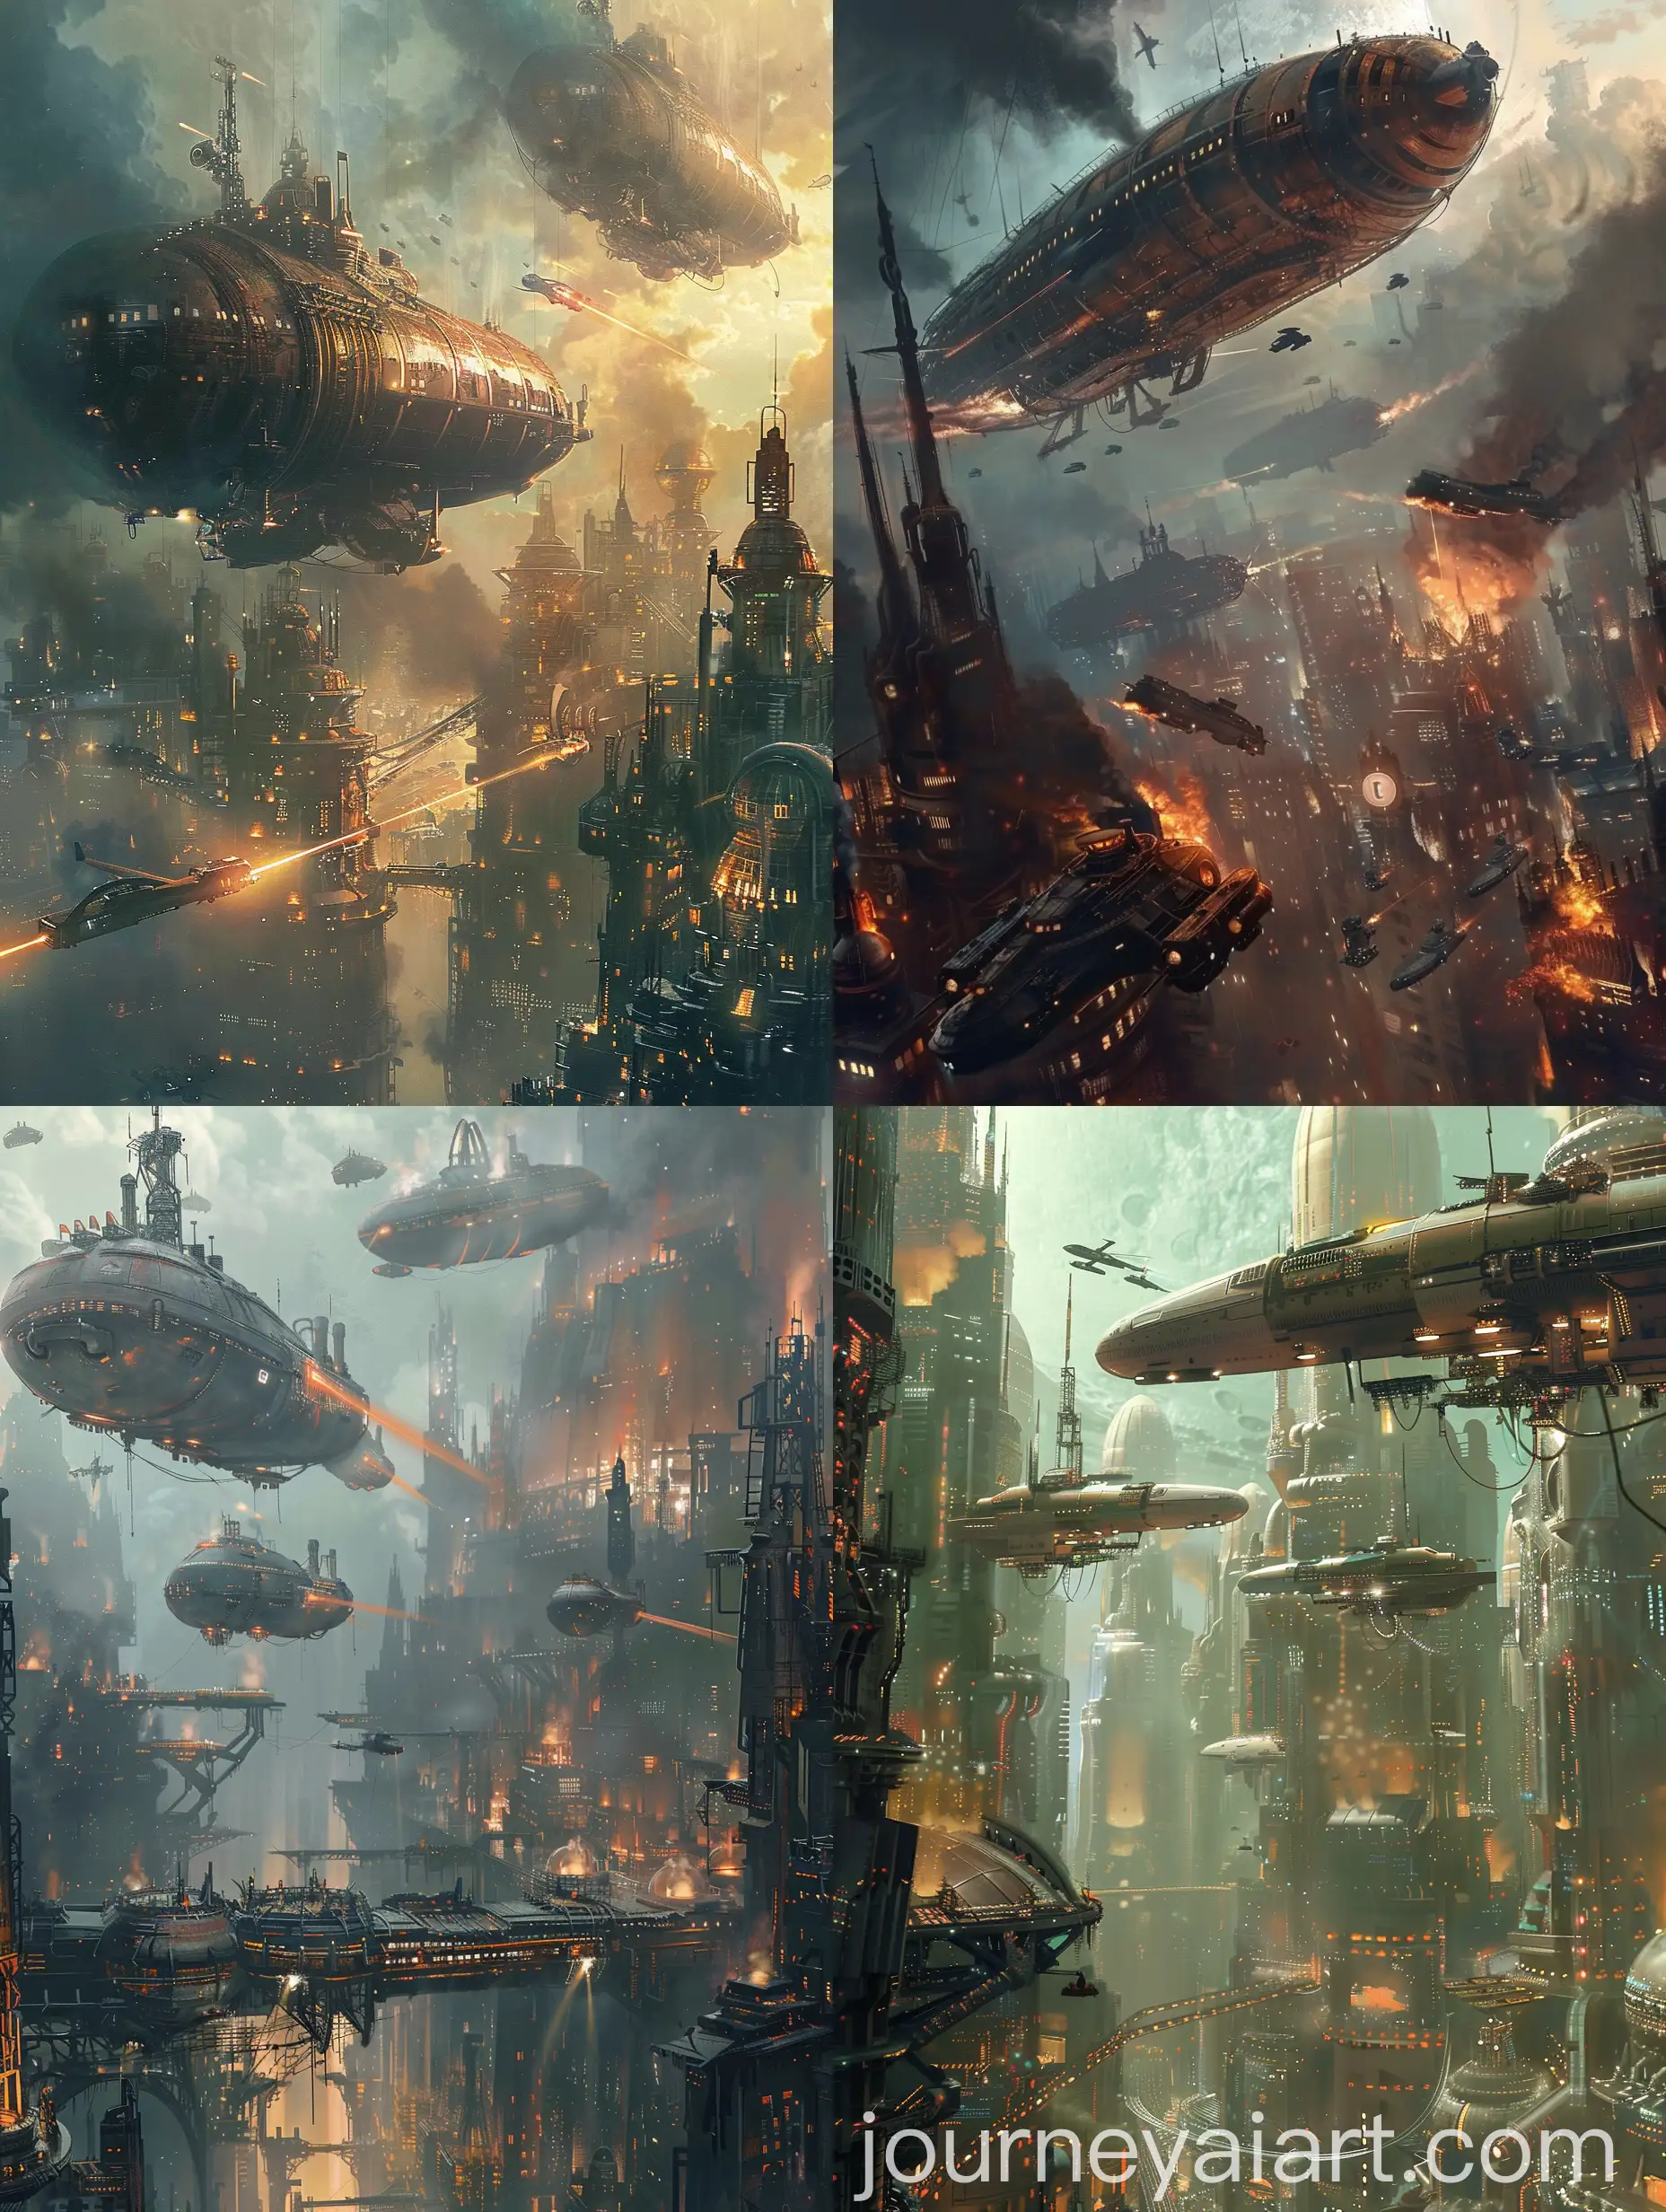 Steampunk-Airships-and-Tanks-Attack-Futuristic-City